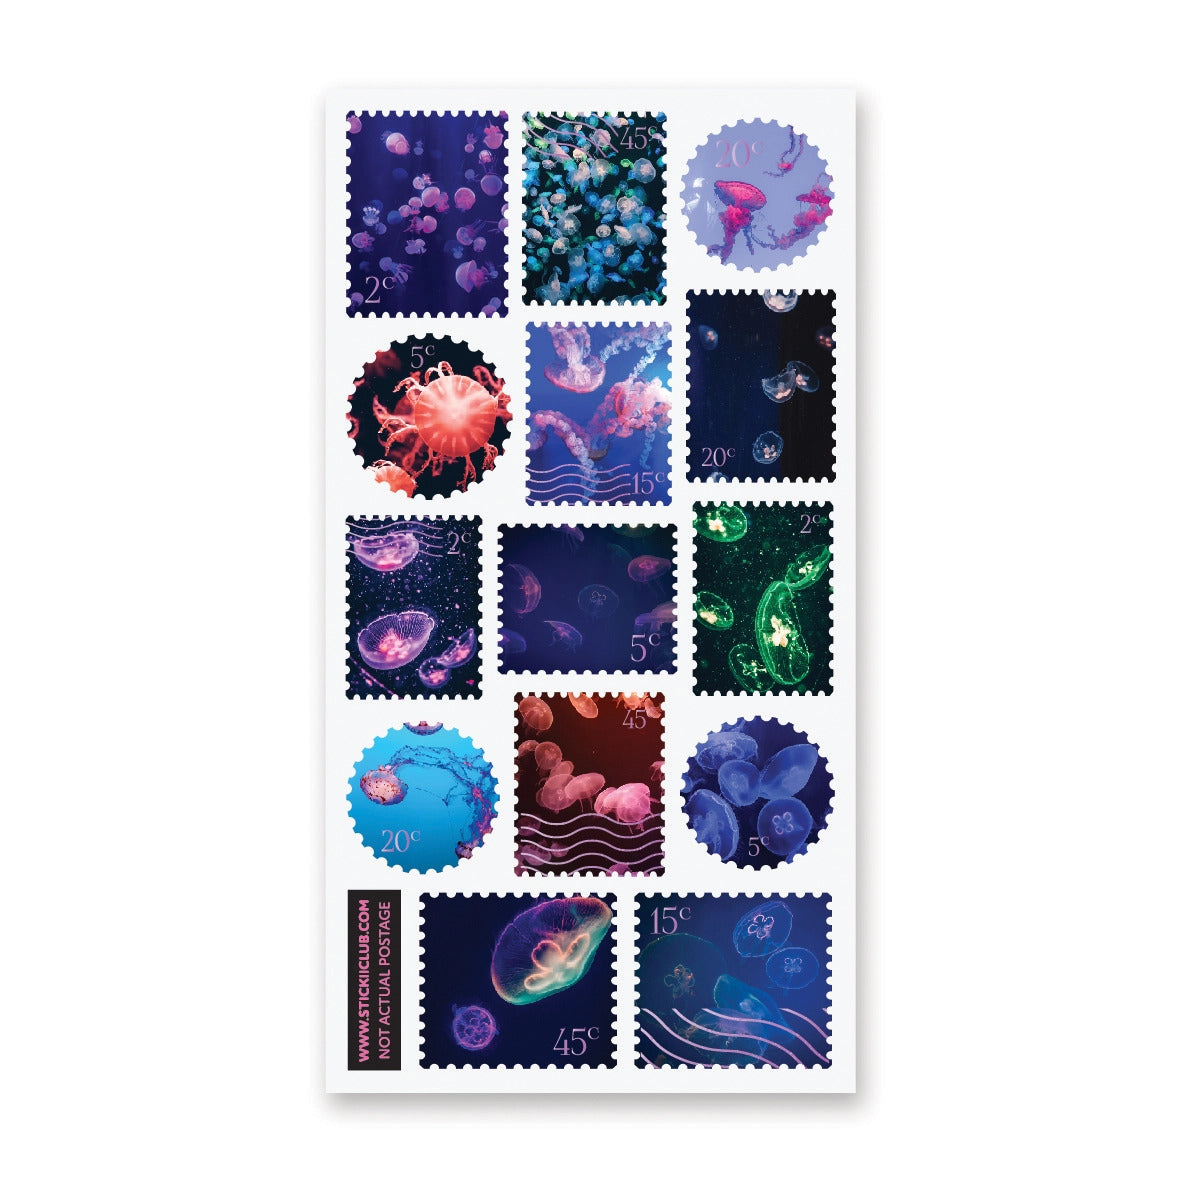 STICKII Sticker Sheet - Glowing Jellyfish Stamps